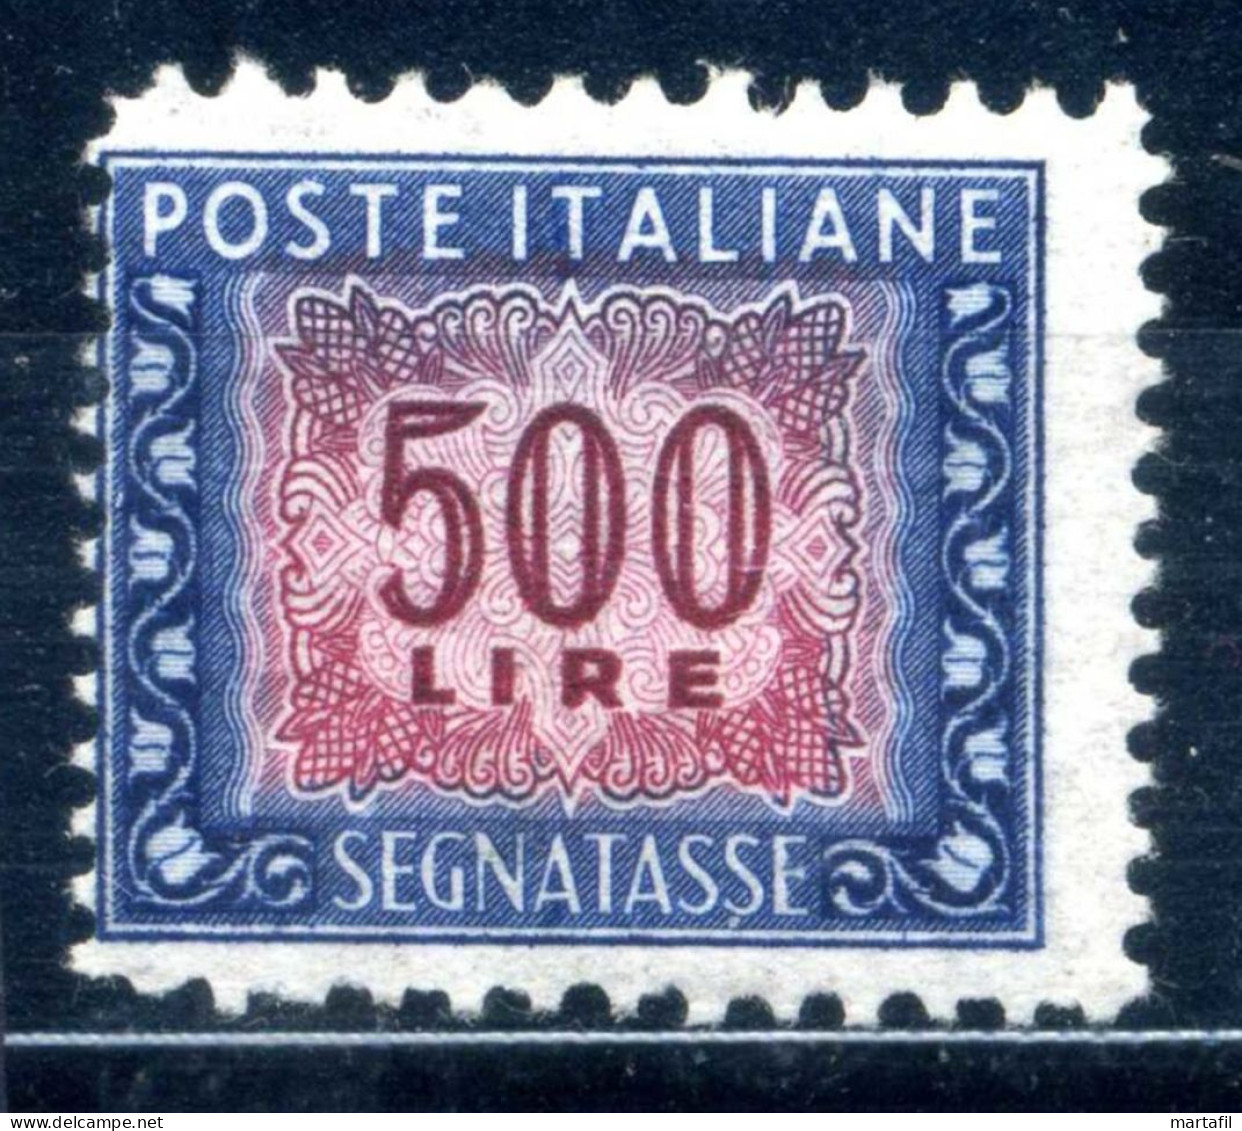 1947-54 Repubblica Italia Segnatasse Tax N.110 MNH ** 500 Lire - Strafport